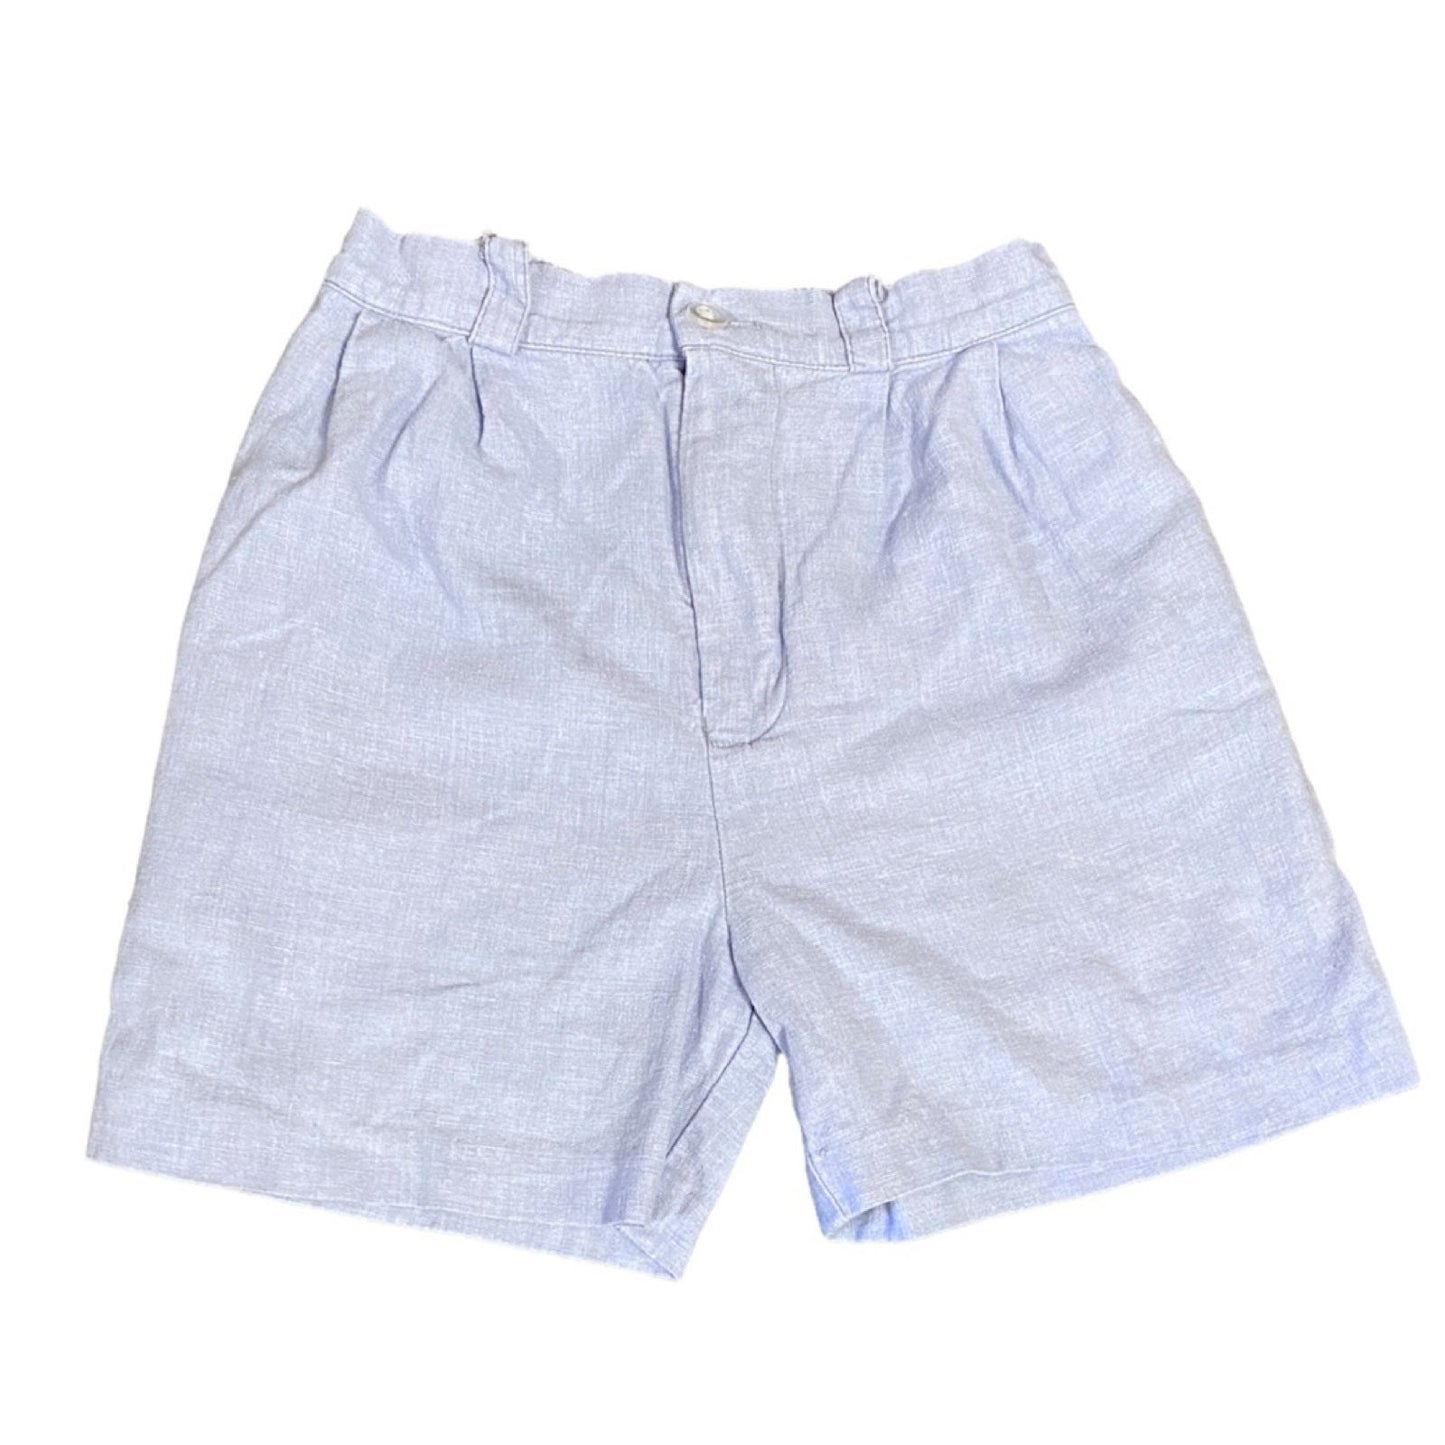 5/6 Kelly’s Kids blue shorts